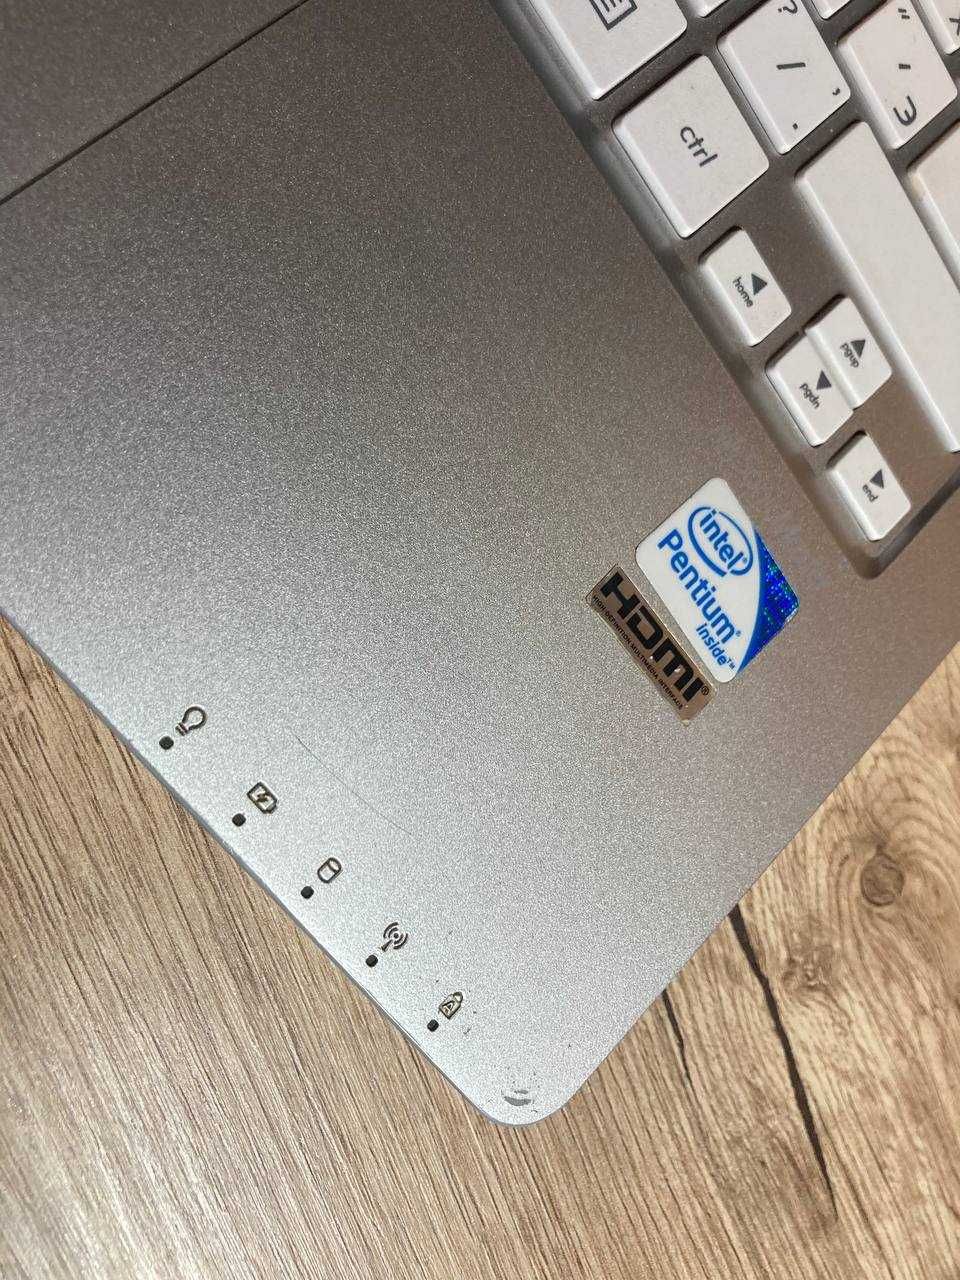 Ноутбук ASUS X201 нетбук